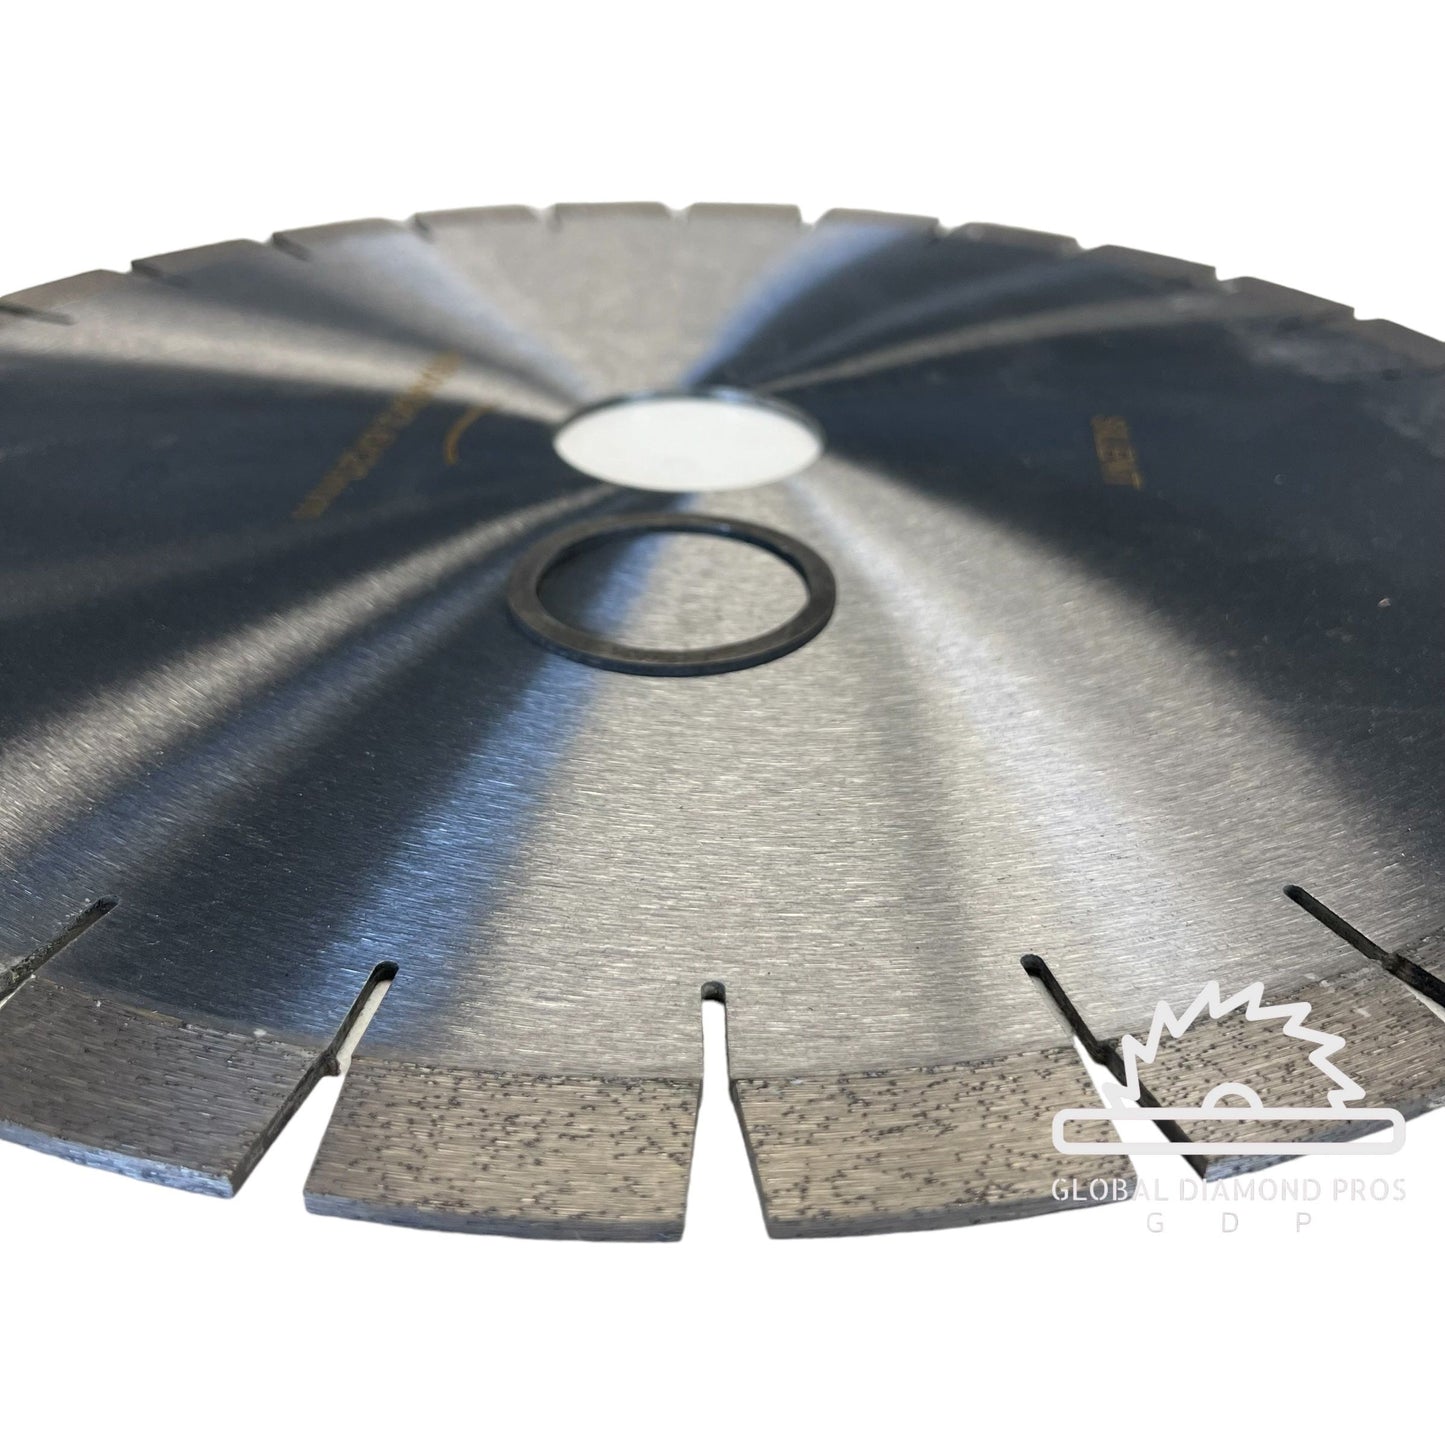 Bridge Saw Blades -  16” Silent Core Diamond Blade for Granite & Quartz Blade